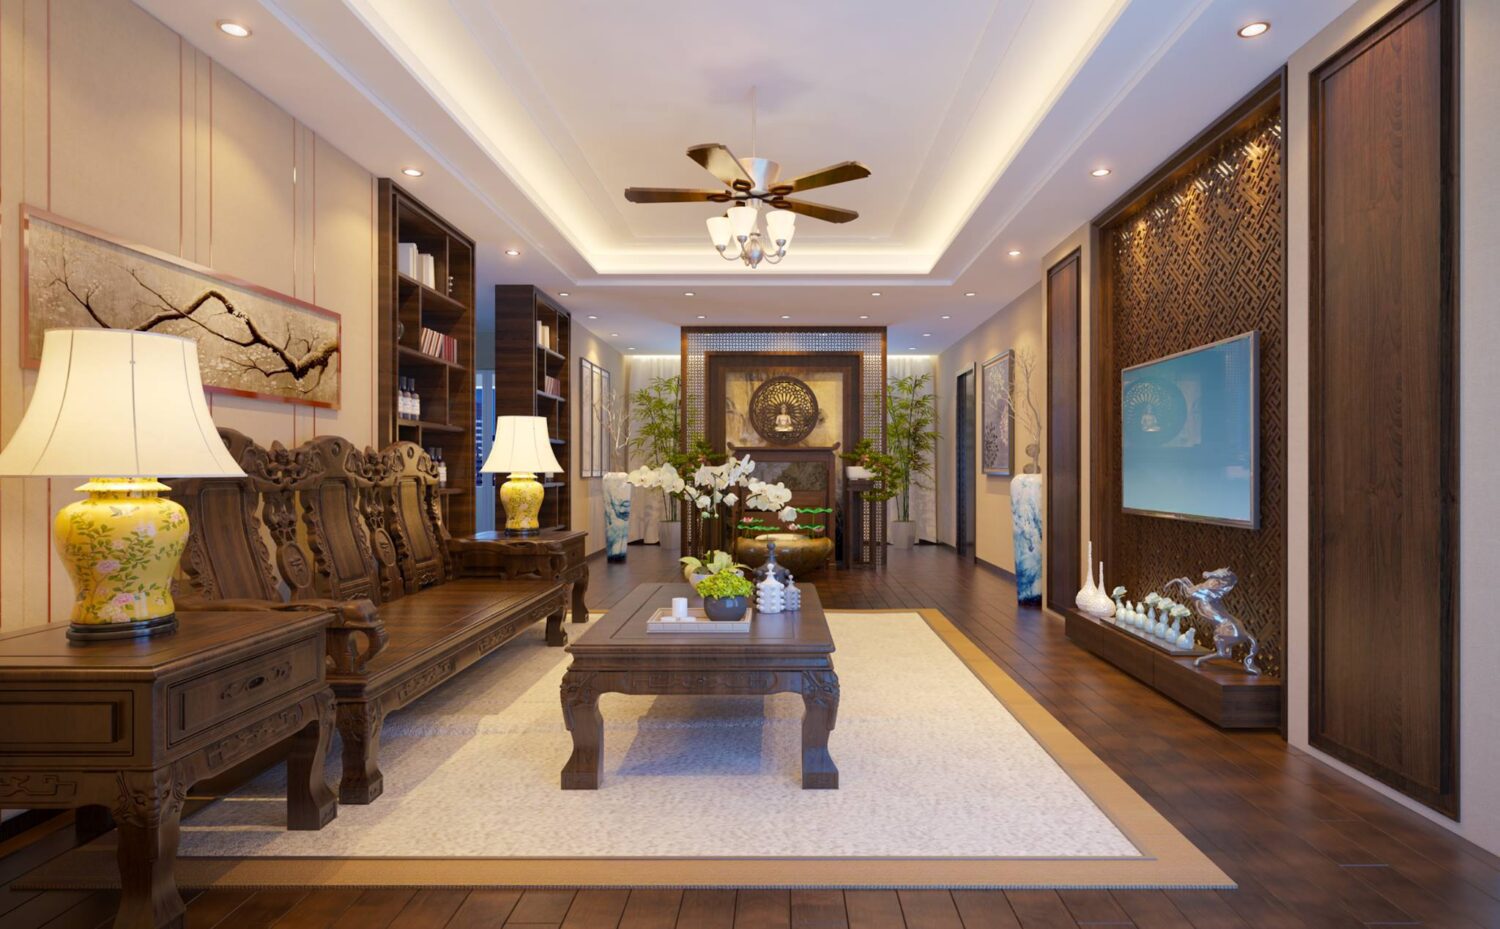 11233. Free 3D Indochine Living Room Interior Model Download